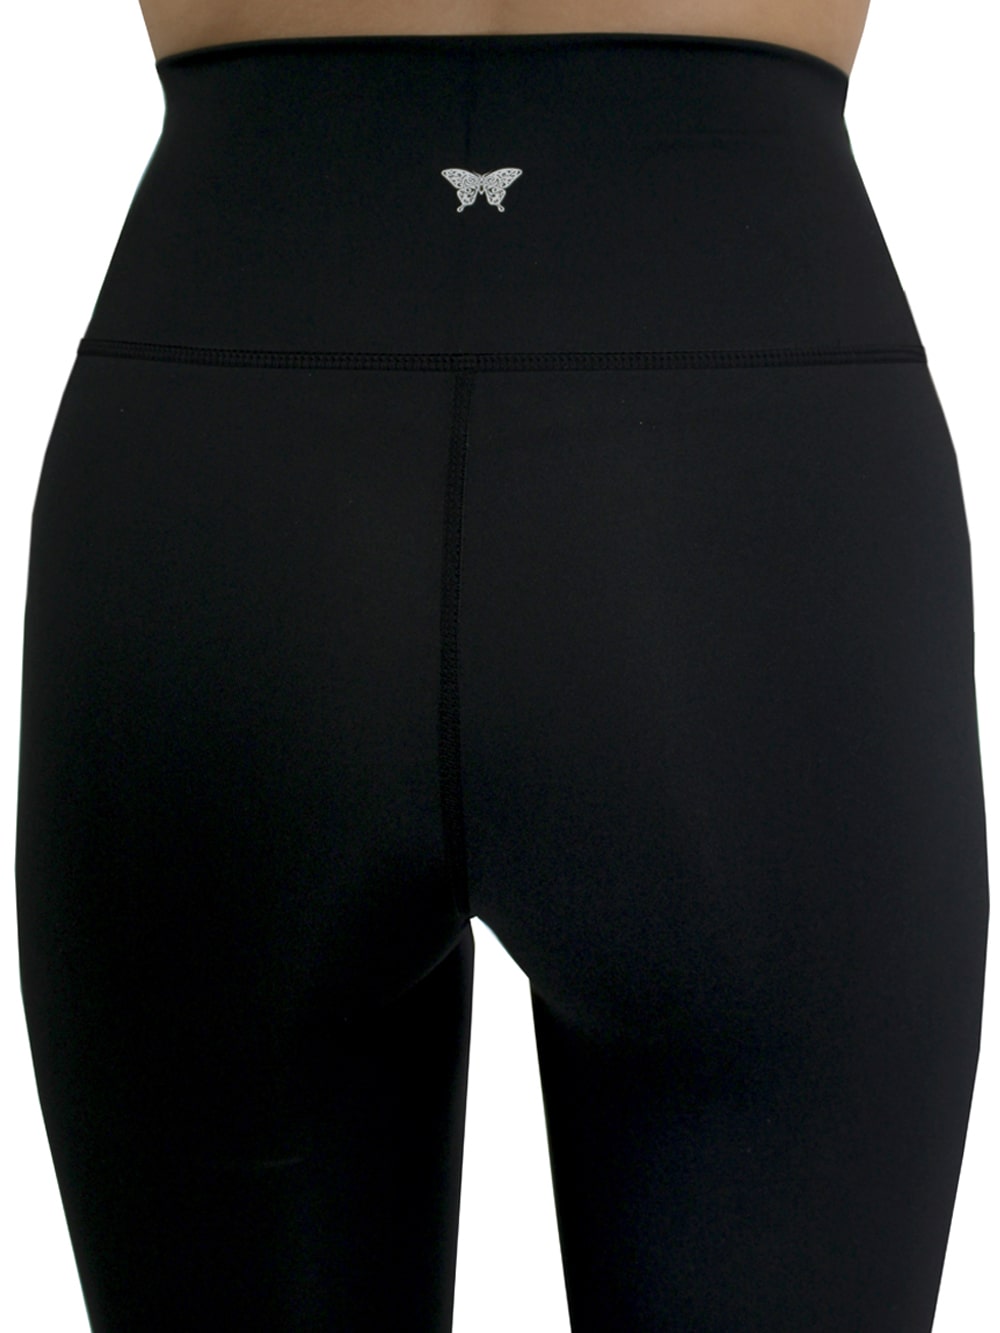 Buffalo Envy Bling Yoga Pants with Rhinestone Logo - Glitterstarz